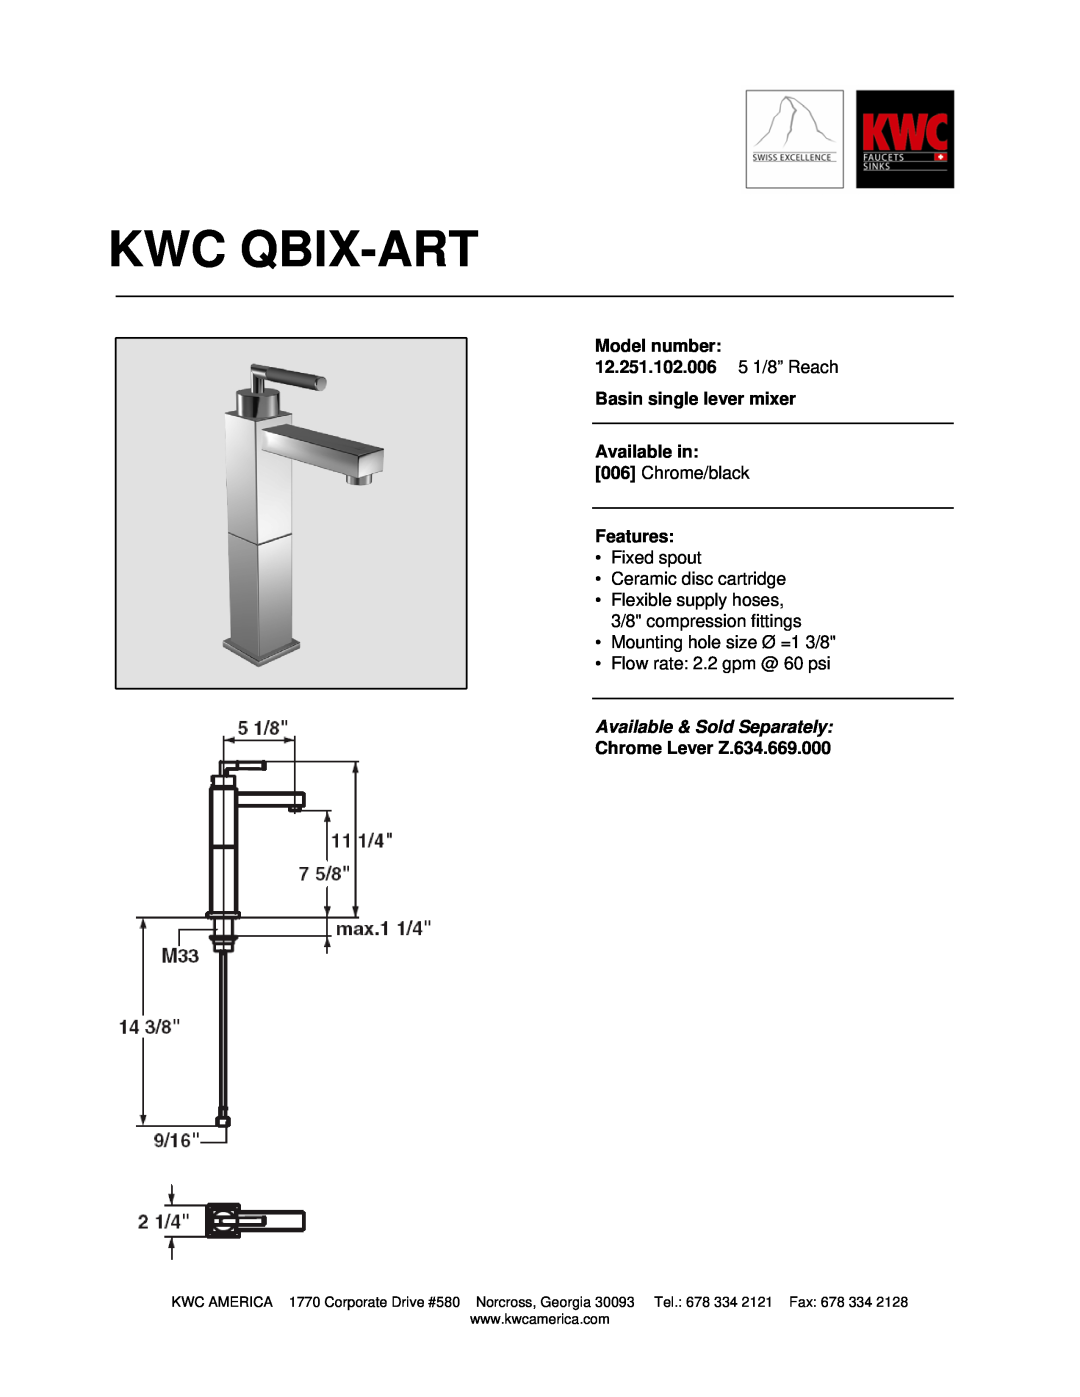 KWC manual Kwc Qbix-Art, Model number 12.251.102.006 5 1/8” Reach, Basin single lever mixer Available in, Chrome/black 